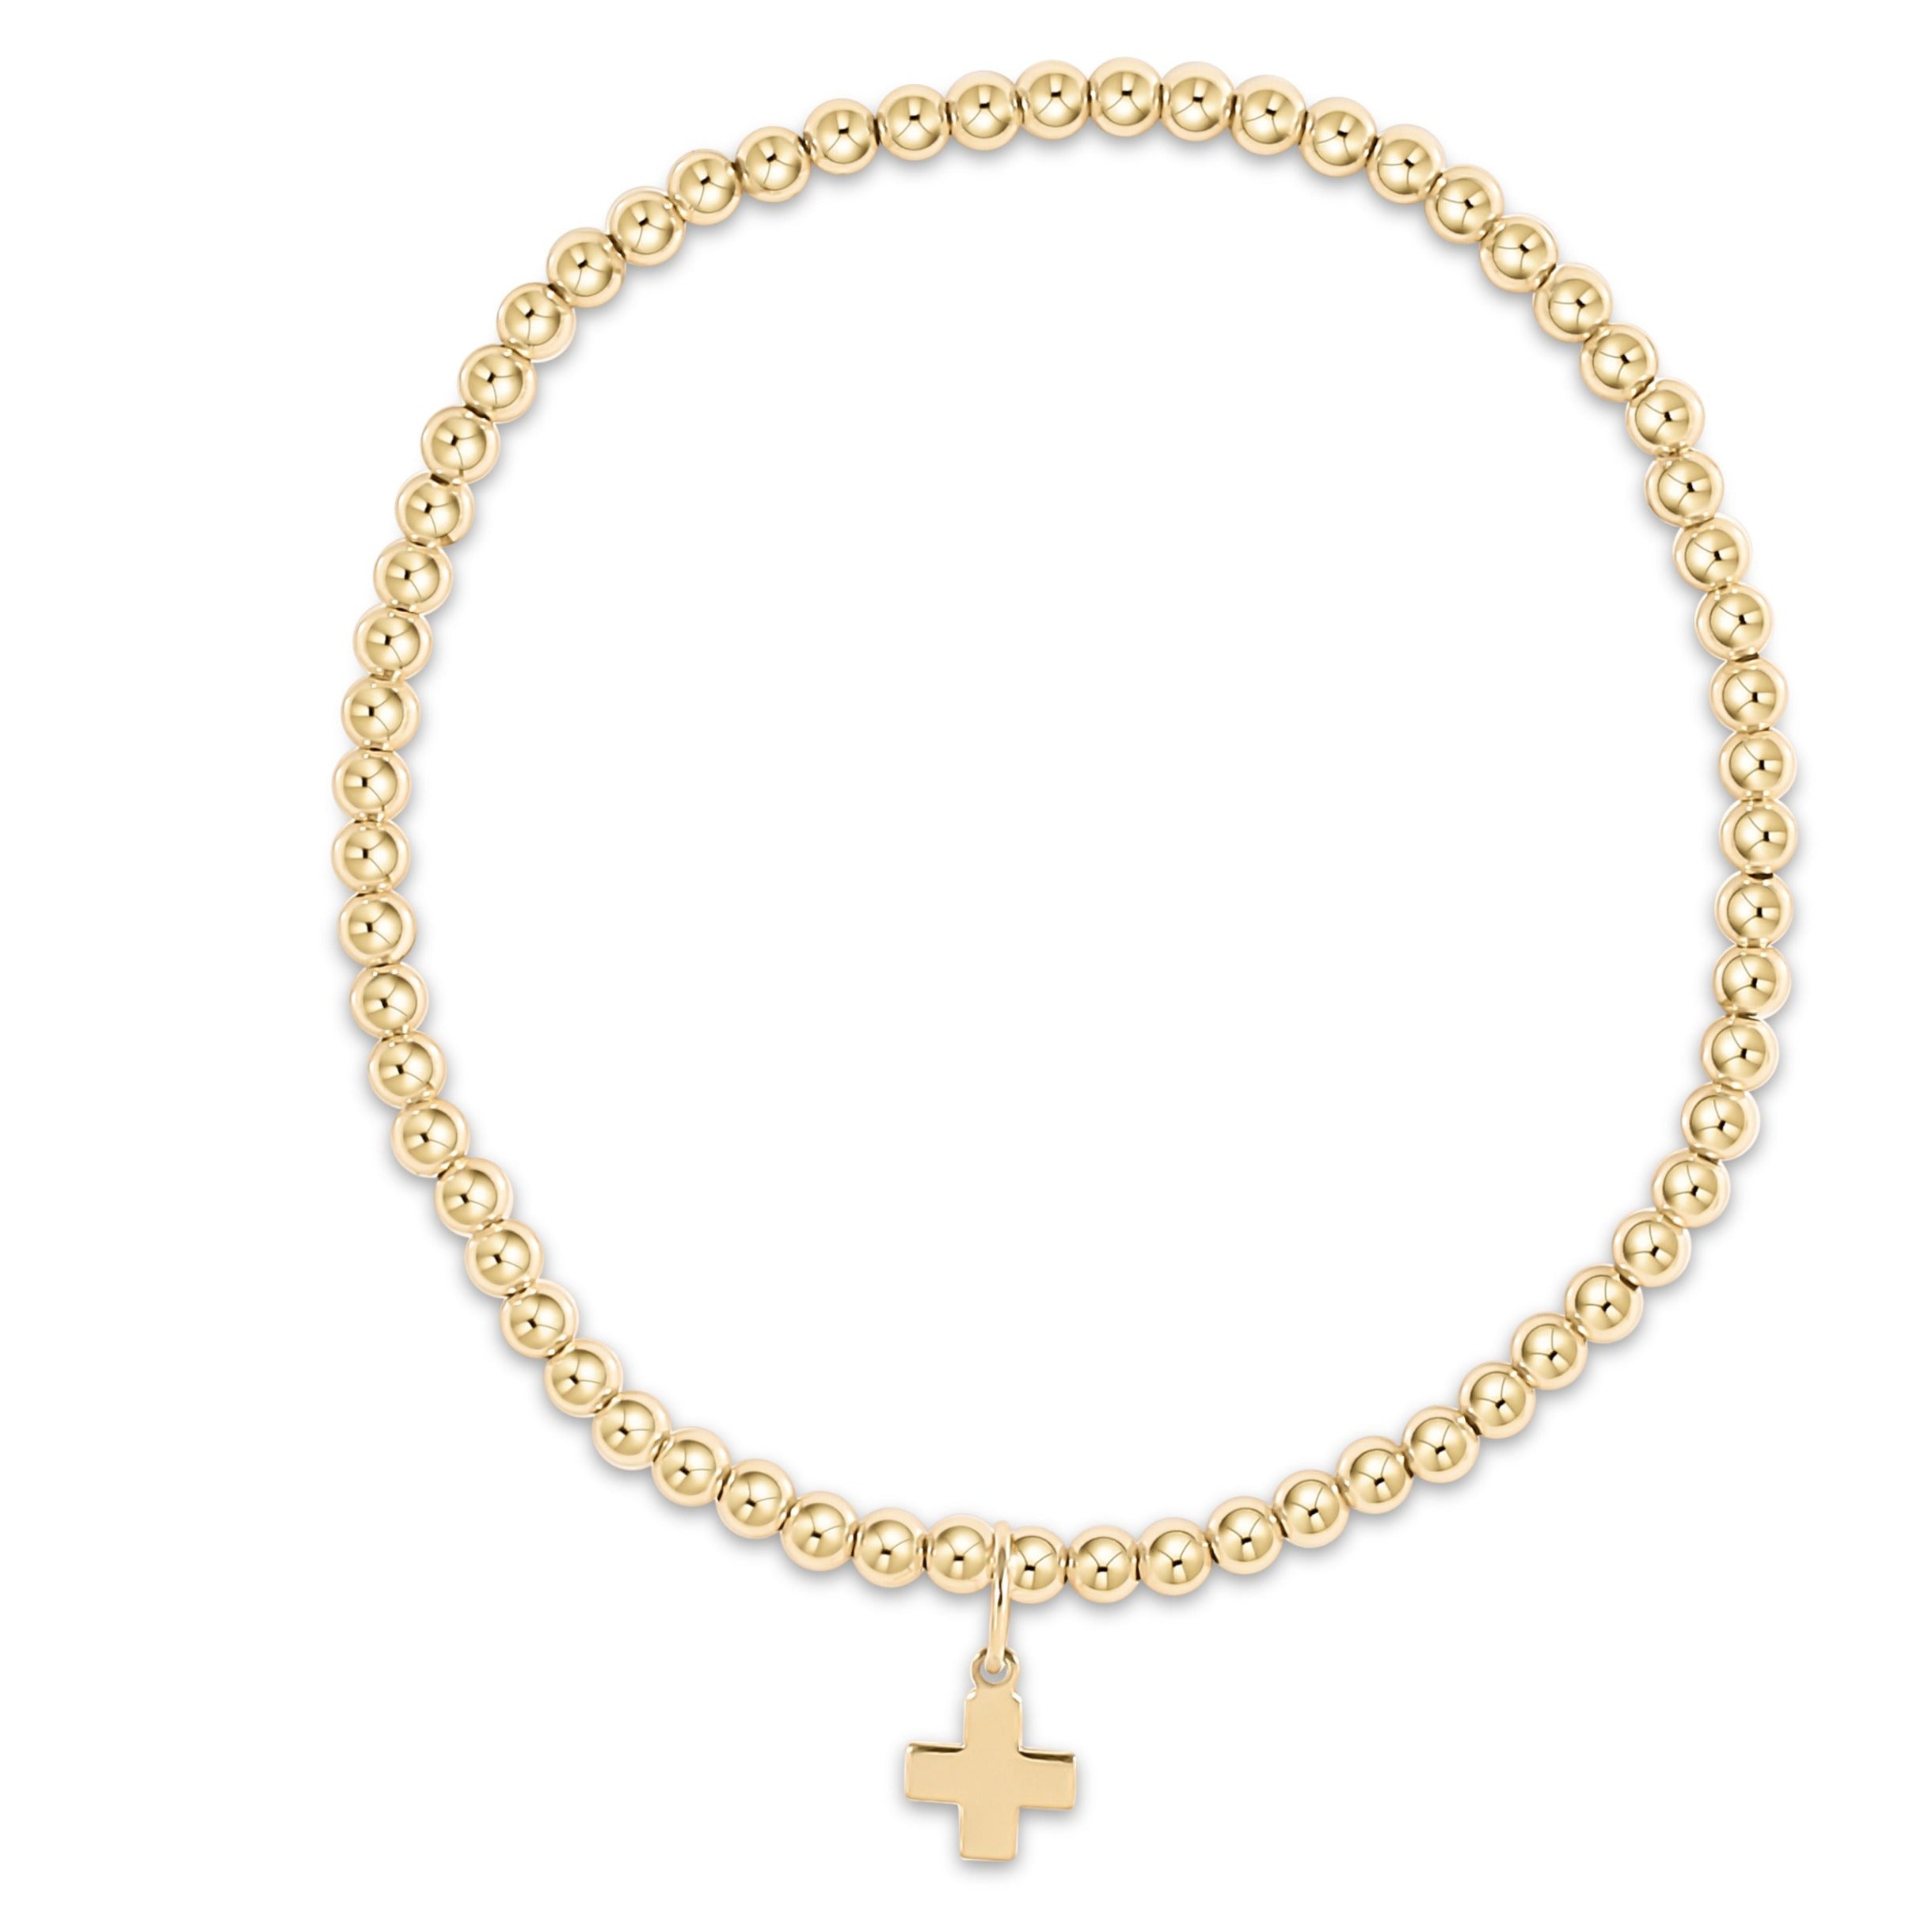 enewton extends - classic gold 3mm bead bracelet - signature cross gold charm